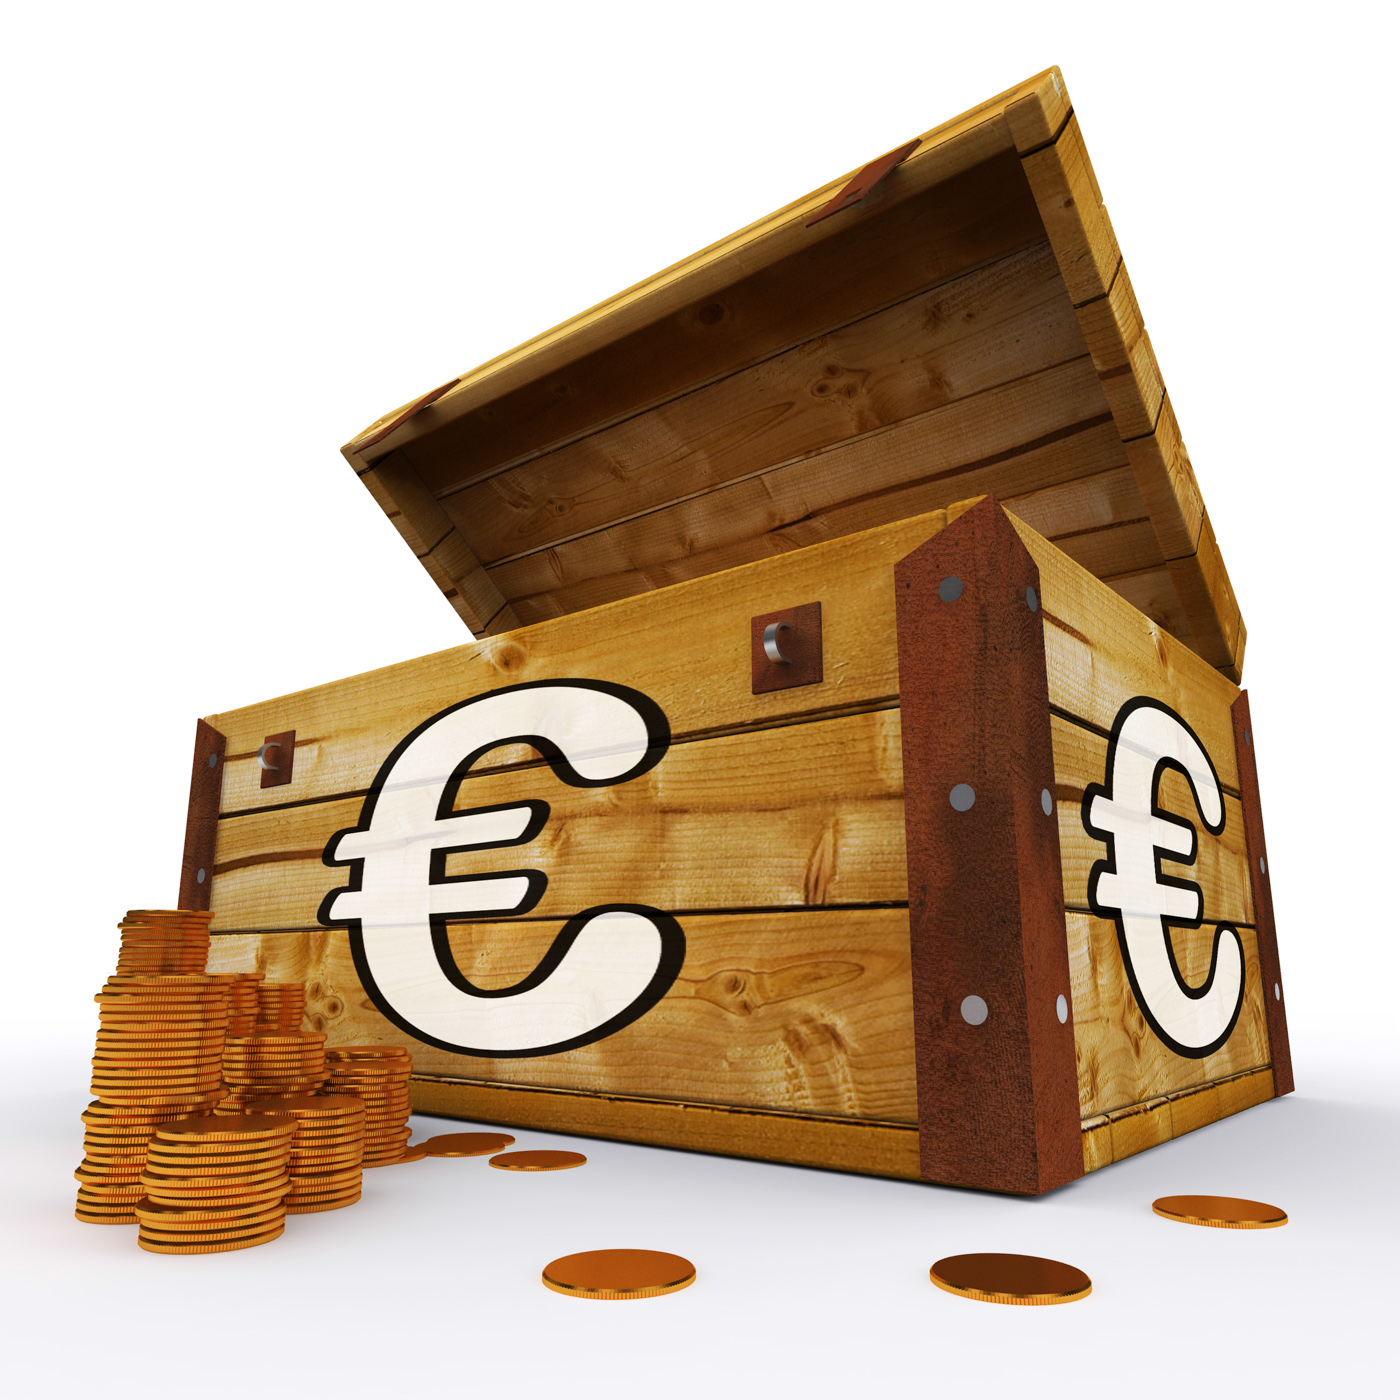 Euro Chest Of Coins Shows European Prosperity And Economy, Monetary, Treasure, Success, Savings, HQ Photo